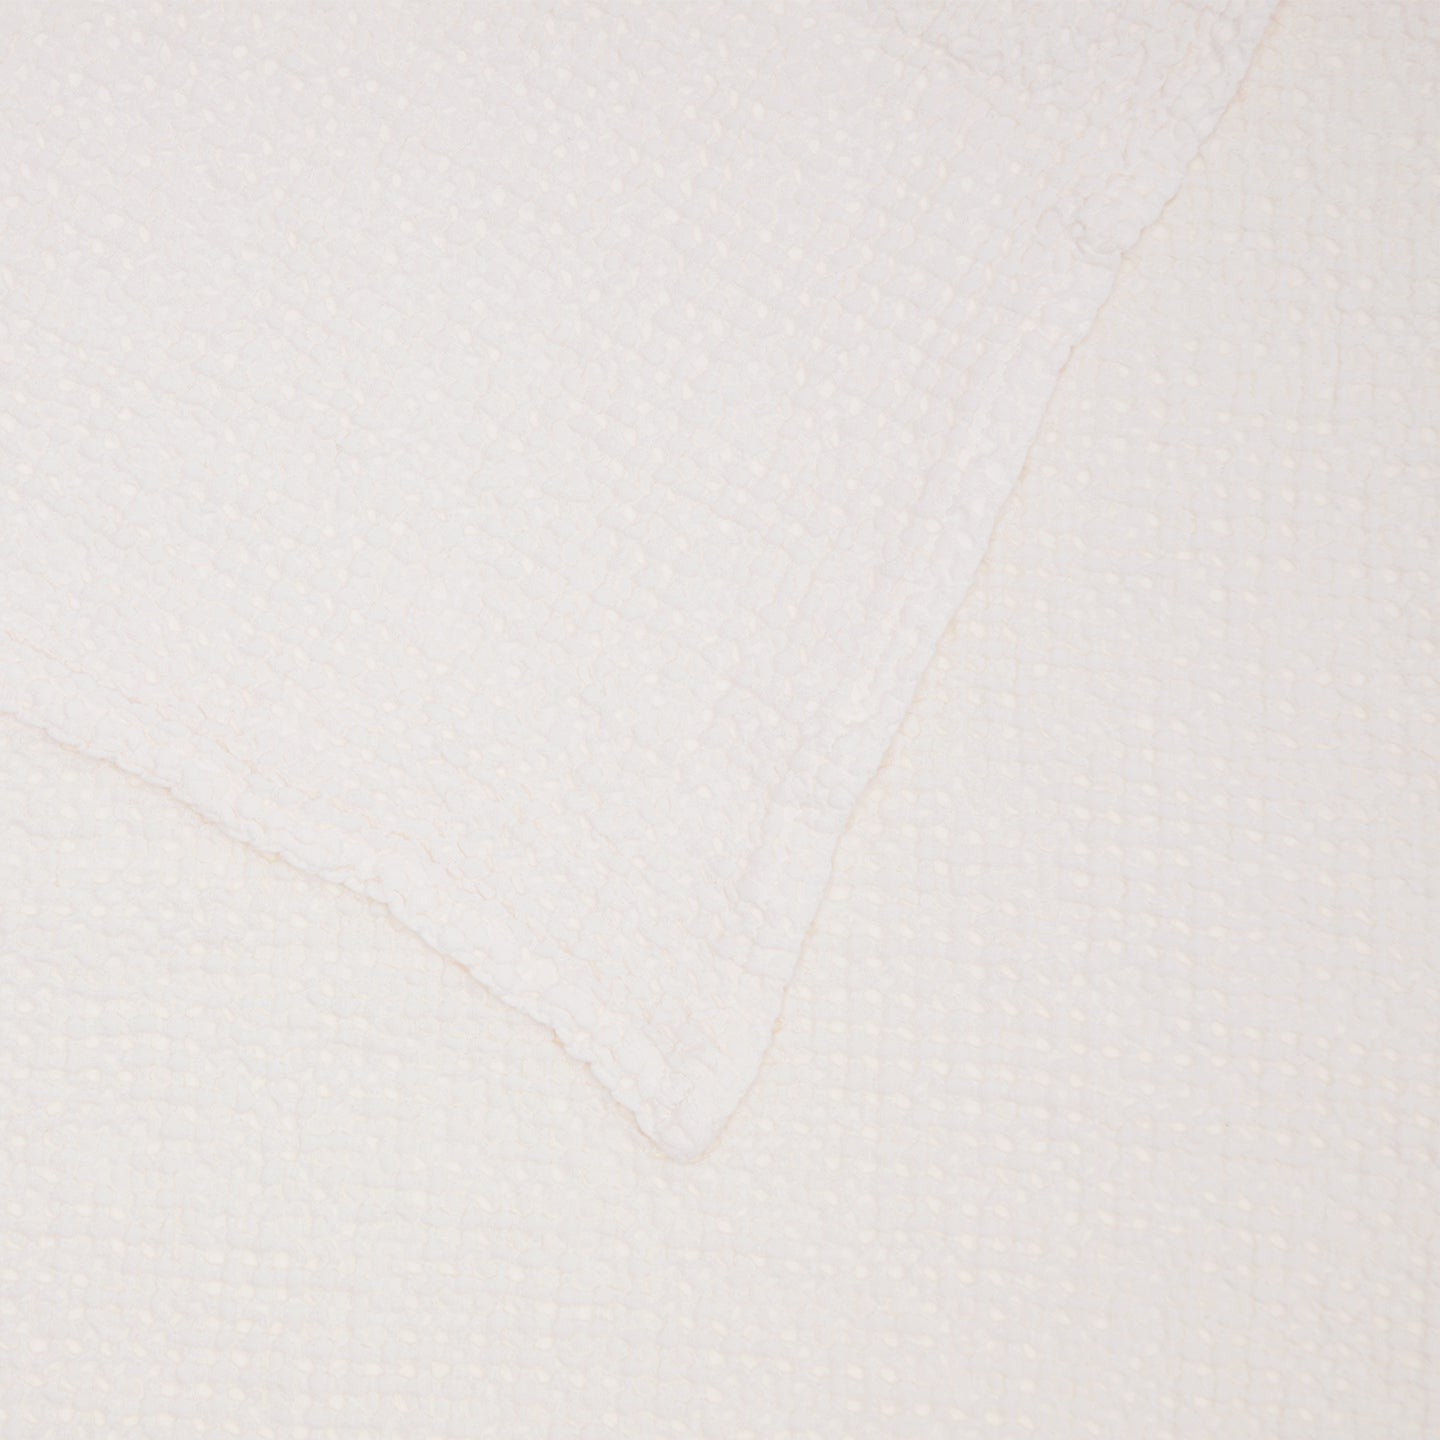 Simple Lightweight Blanket - Petal